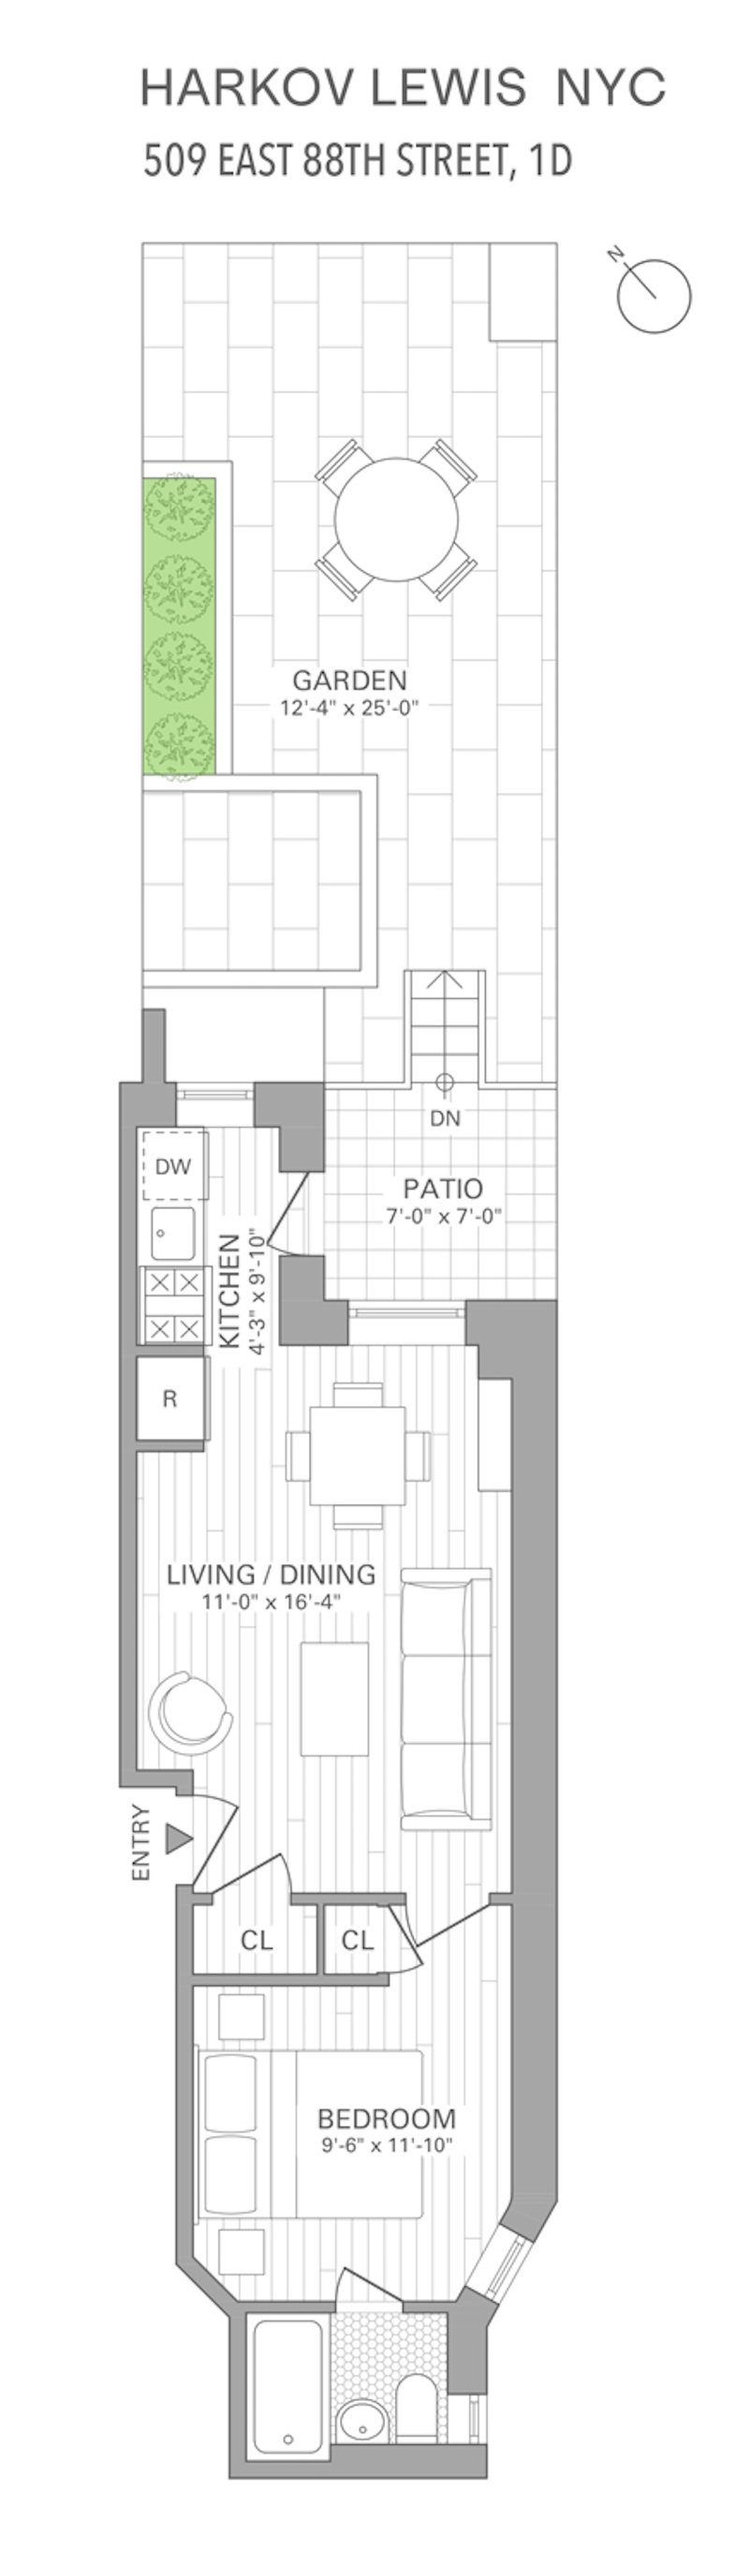 Floorplan for 509 East 88th Street